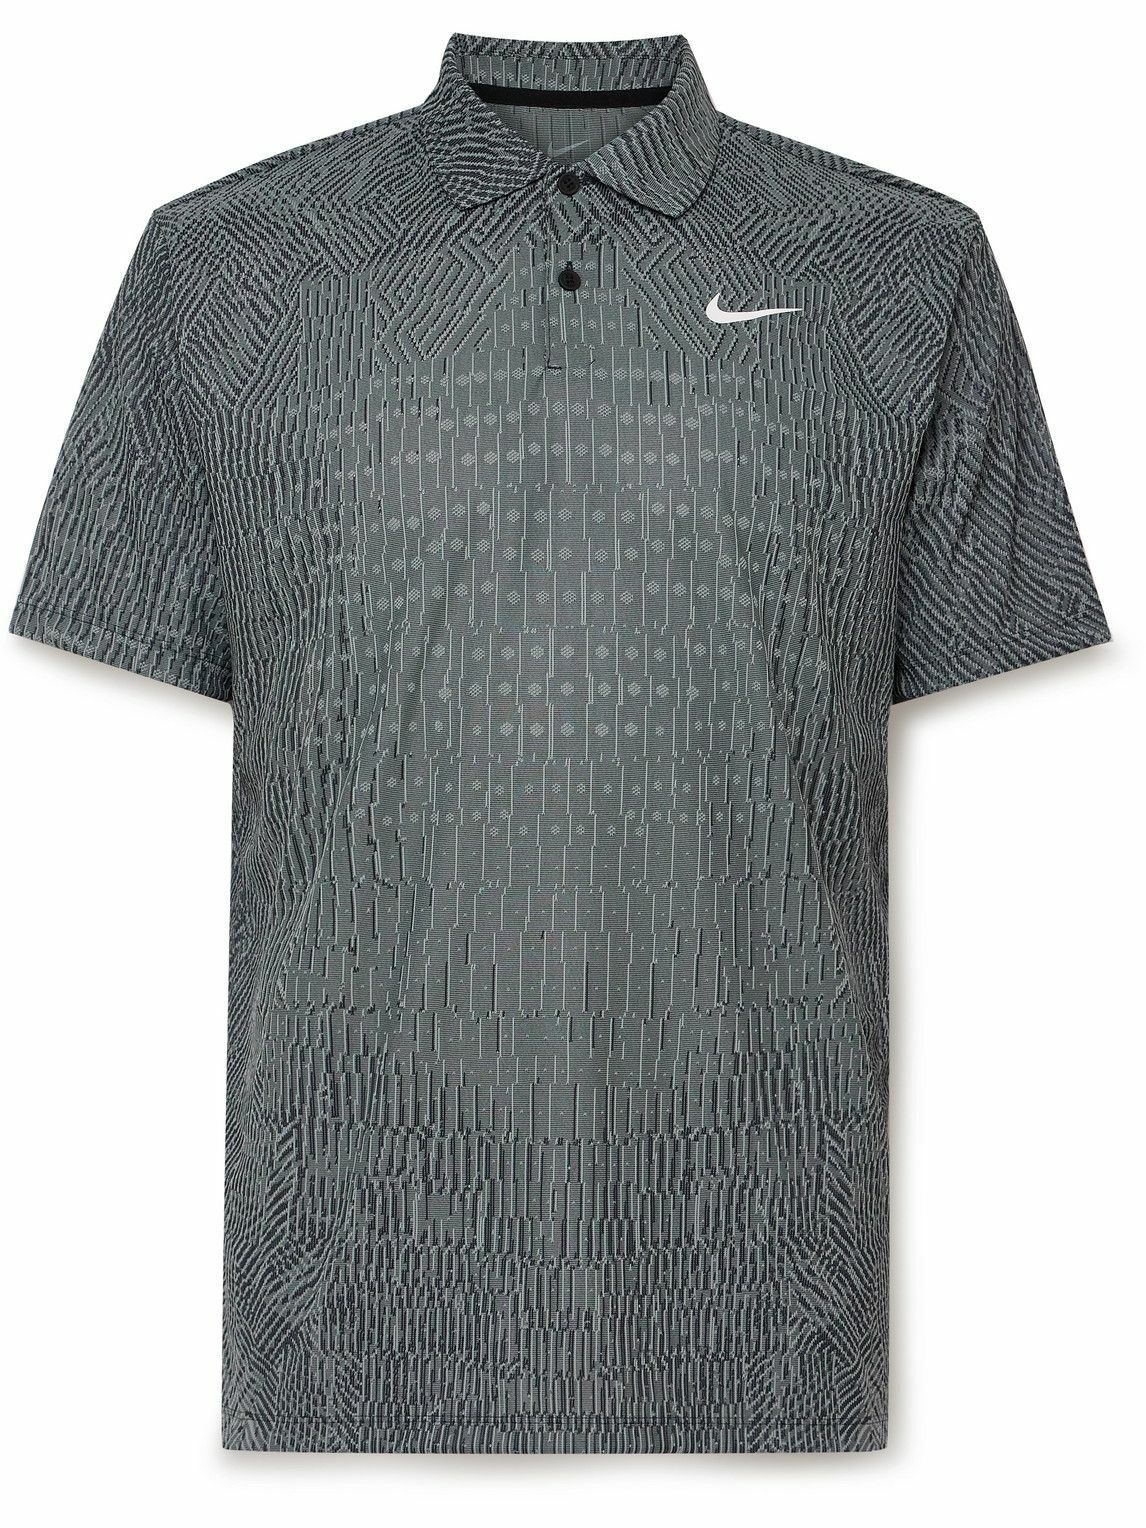 Photo: Nike Golf - Tour Dri-FIT ADV Jacquard Golf Polo Shirt - Gray